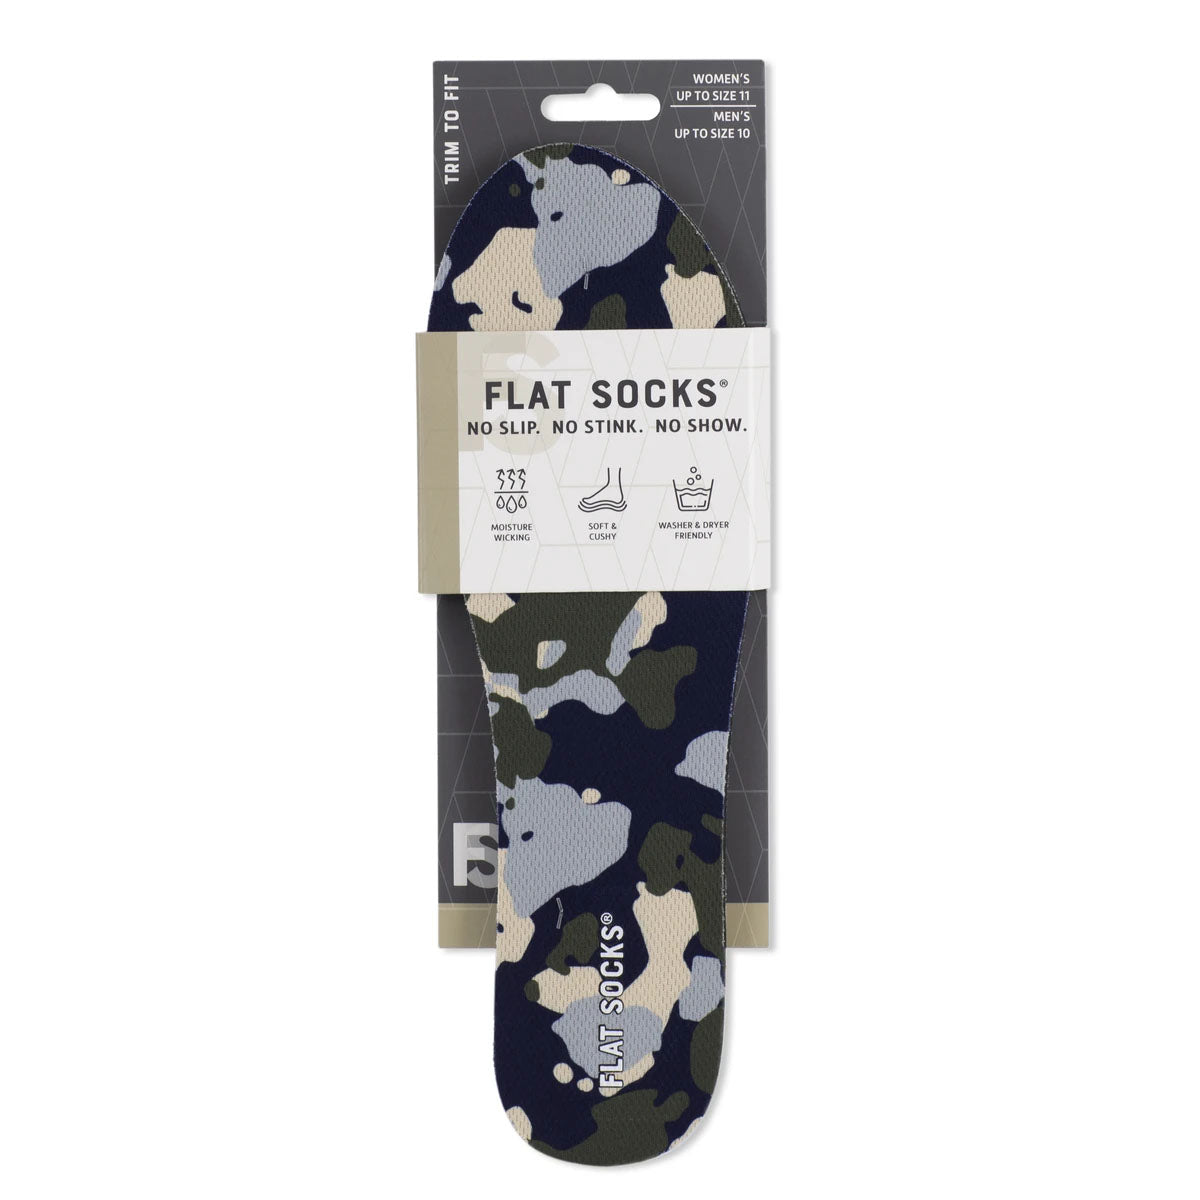 FP and Powerstep Flat Socks